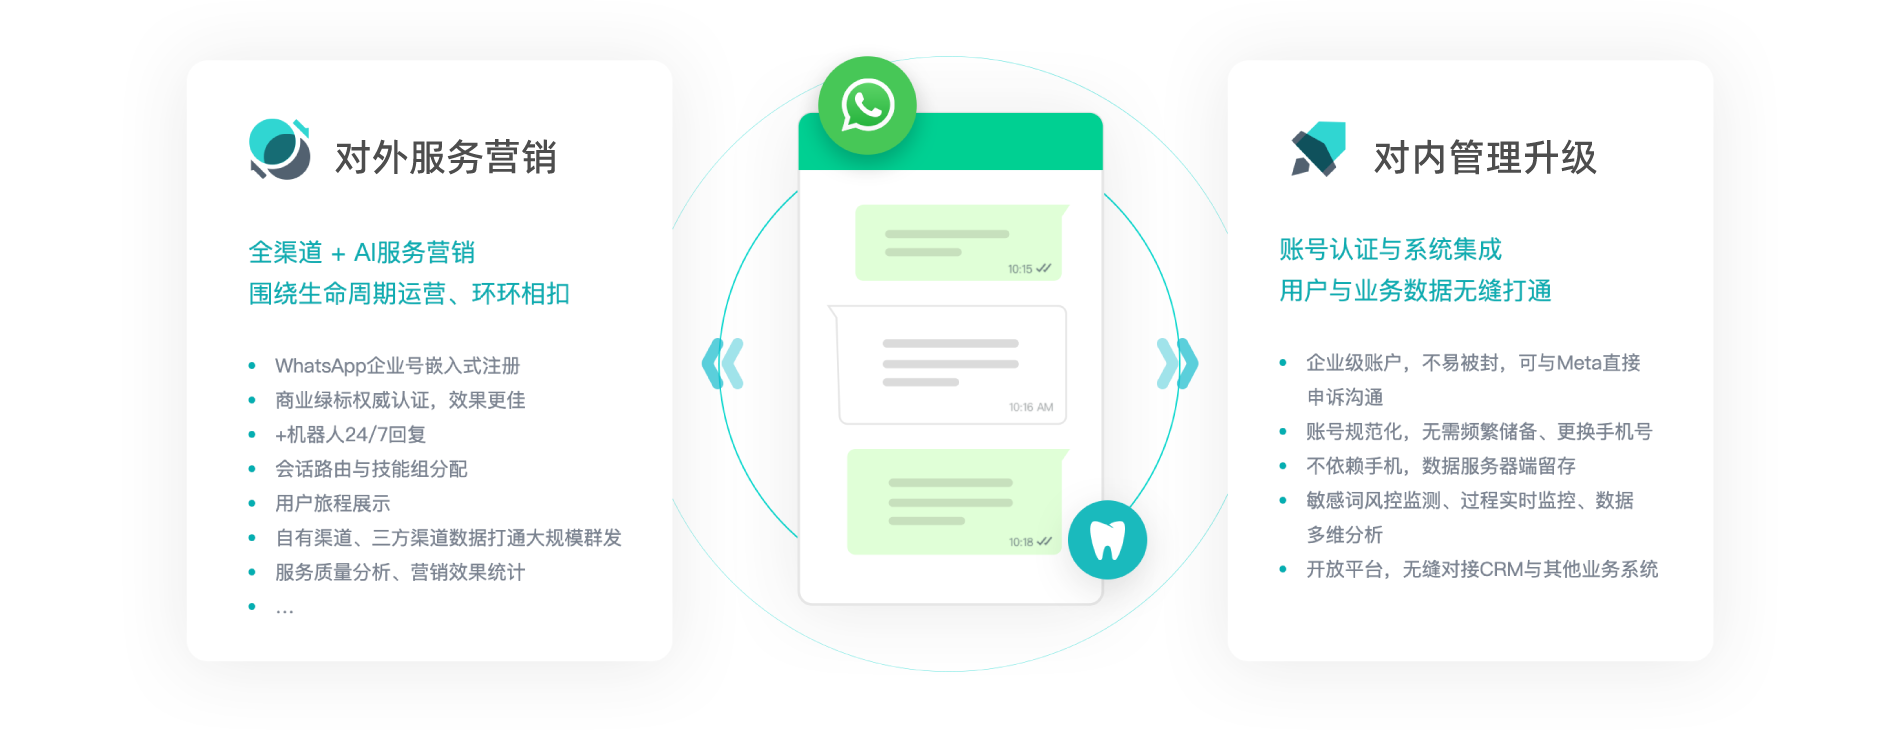 WhatsApp官方伙伴 海外私域营销必备工具